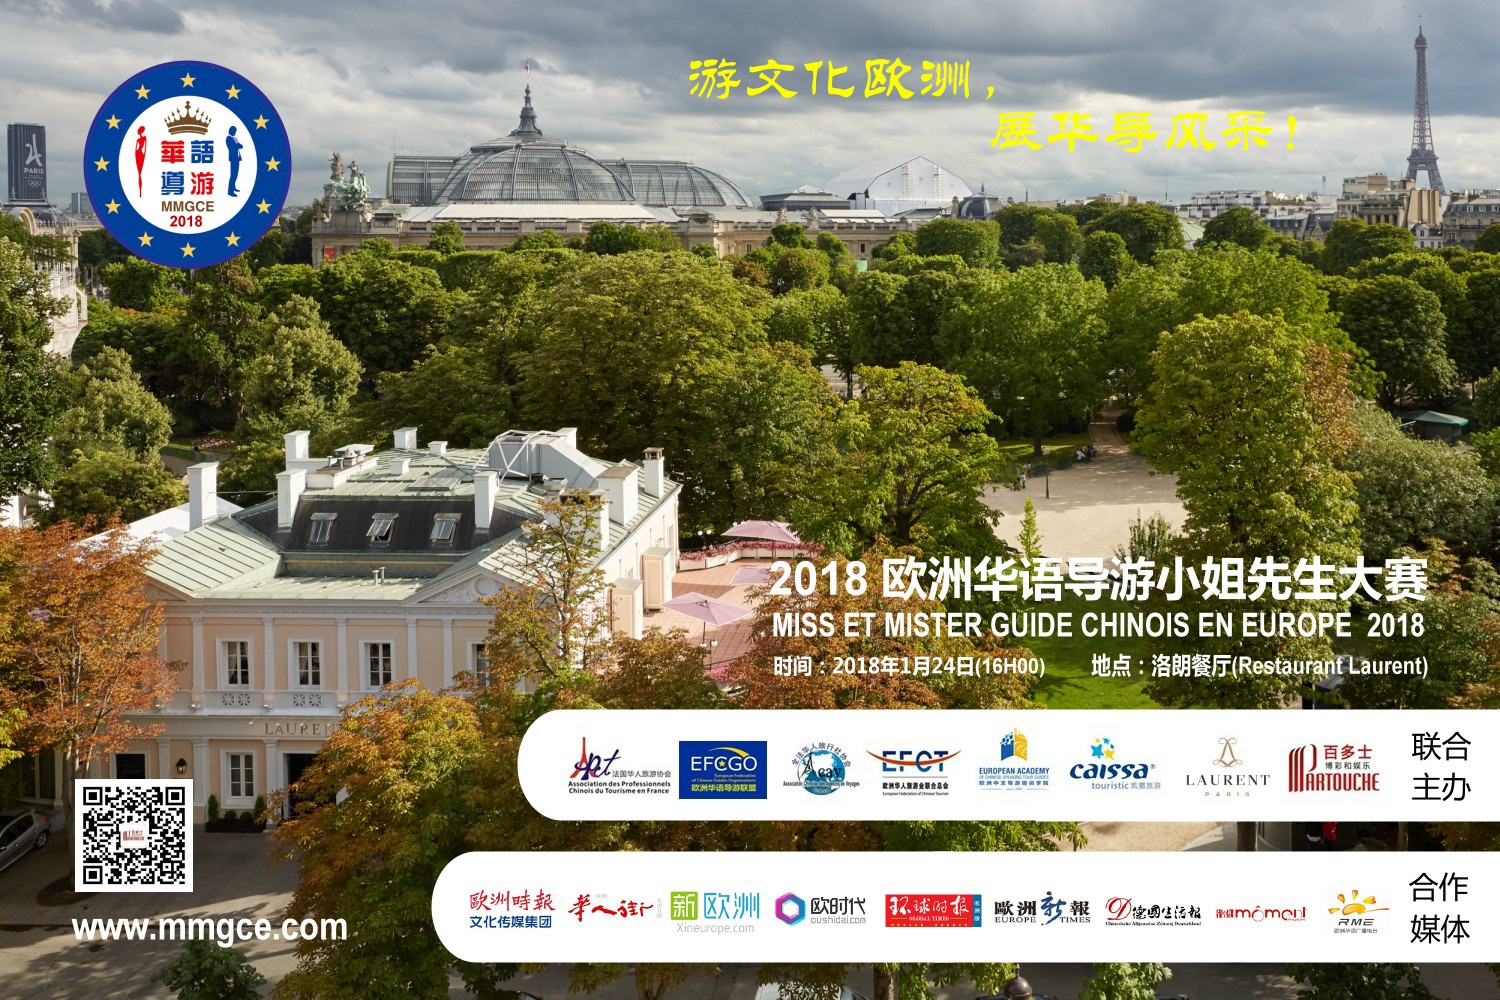 【2018MMGCE】第三届欧洲华语导游小姐先生大赛 ：欧洲华人旅游界的才艺展示舞台！